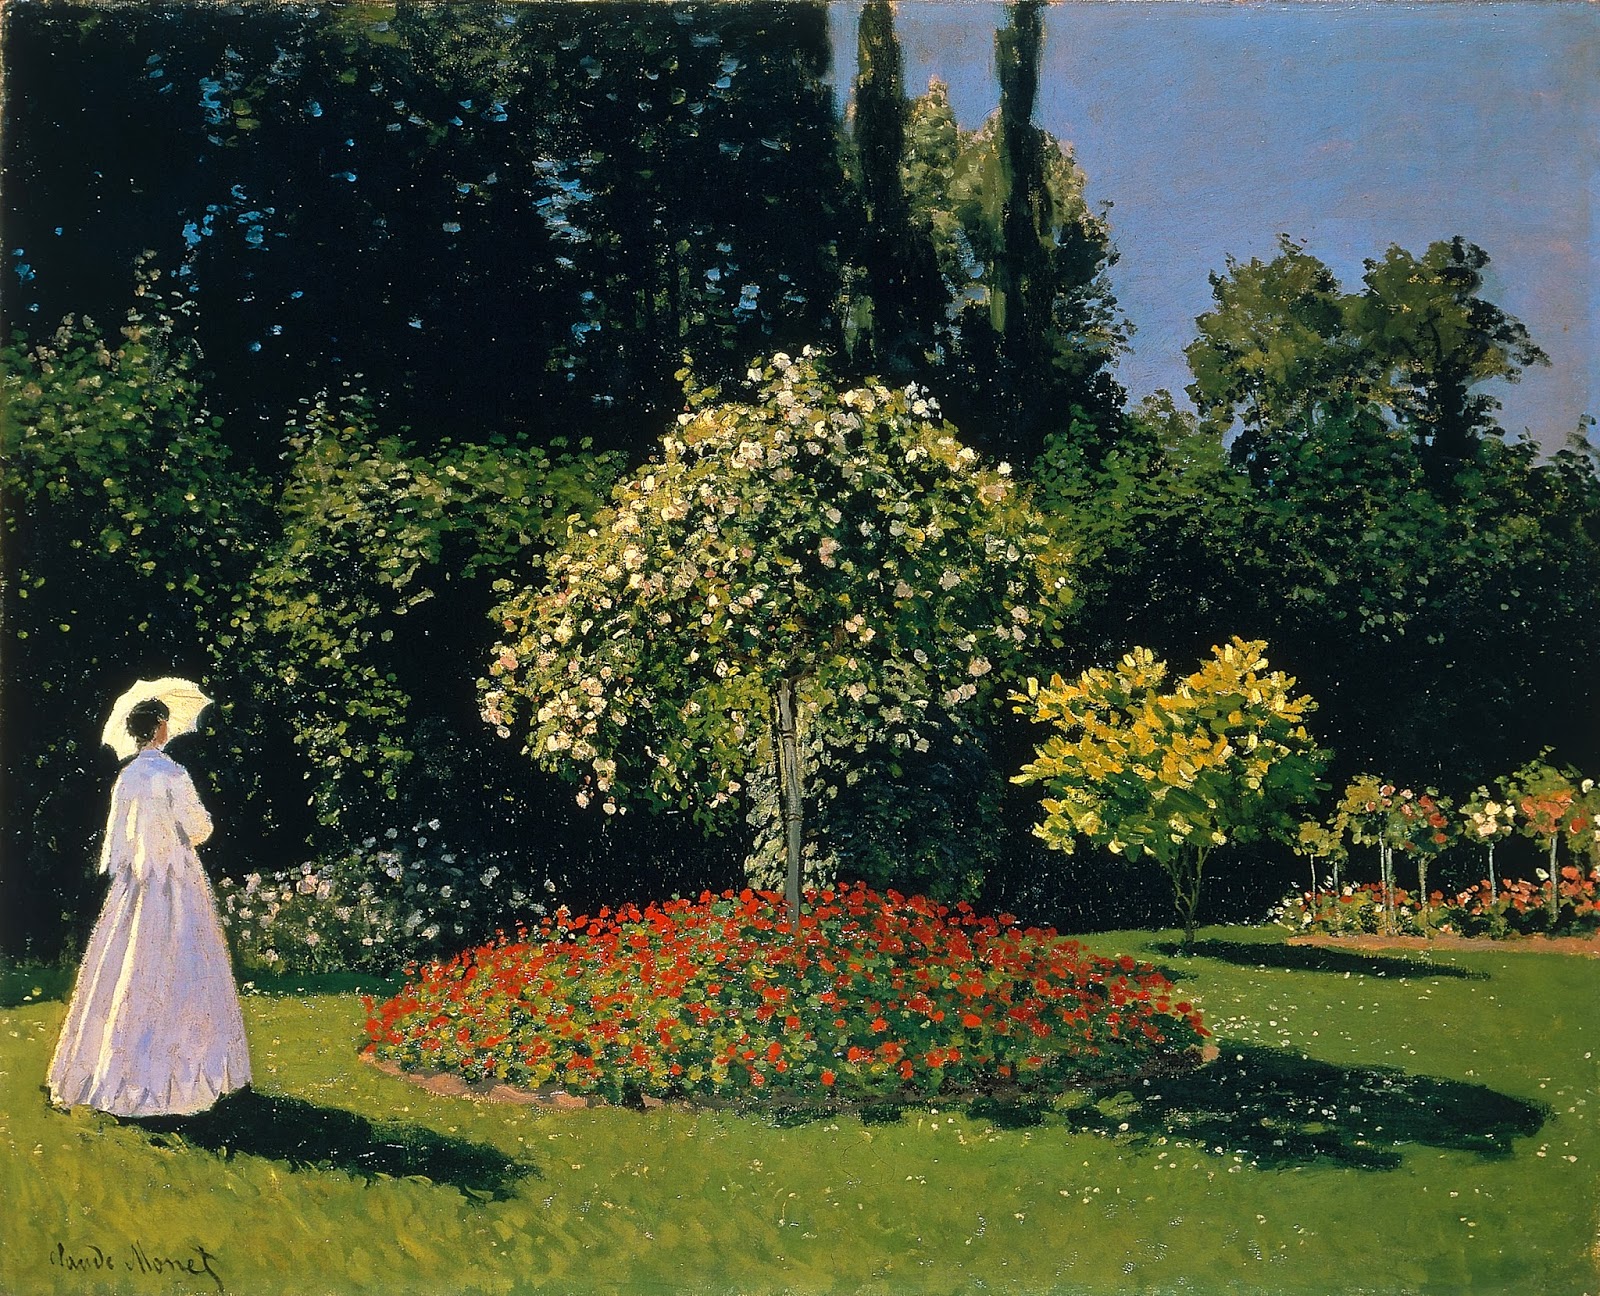 Claude+Monet-1840-1926 (341).jpg